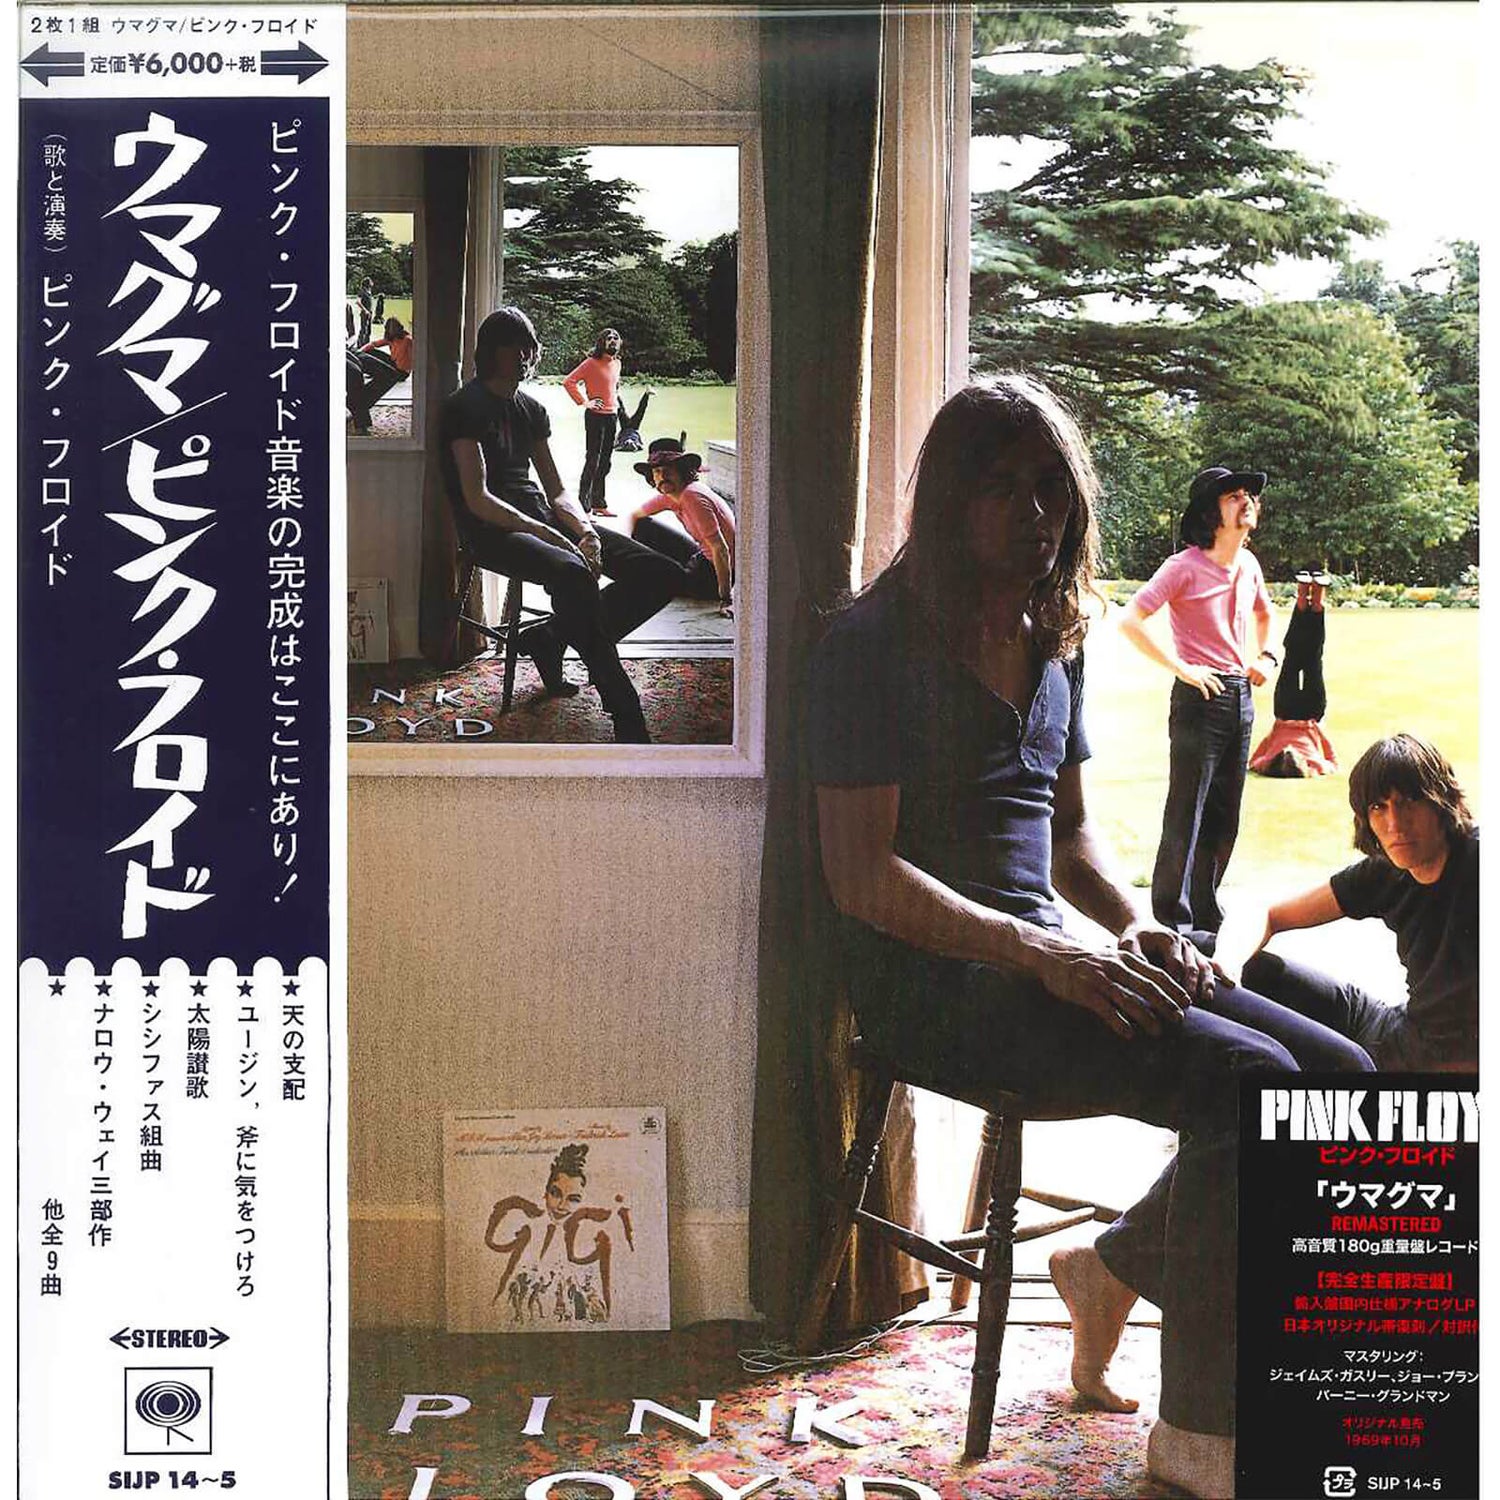 Pink Floyd - Ummagumma Vinyl Japanese Edition